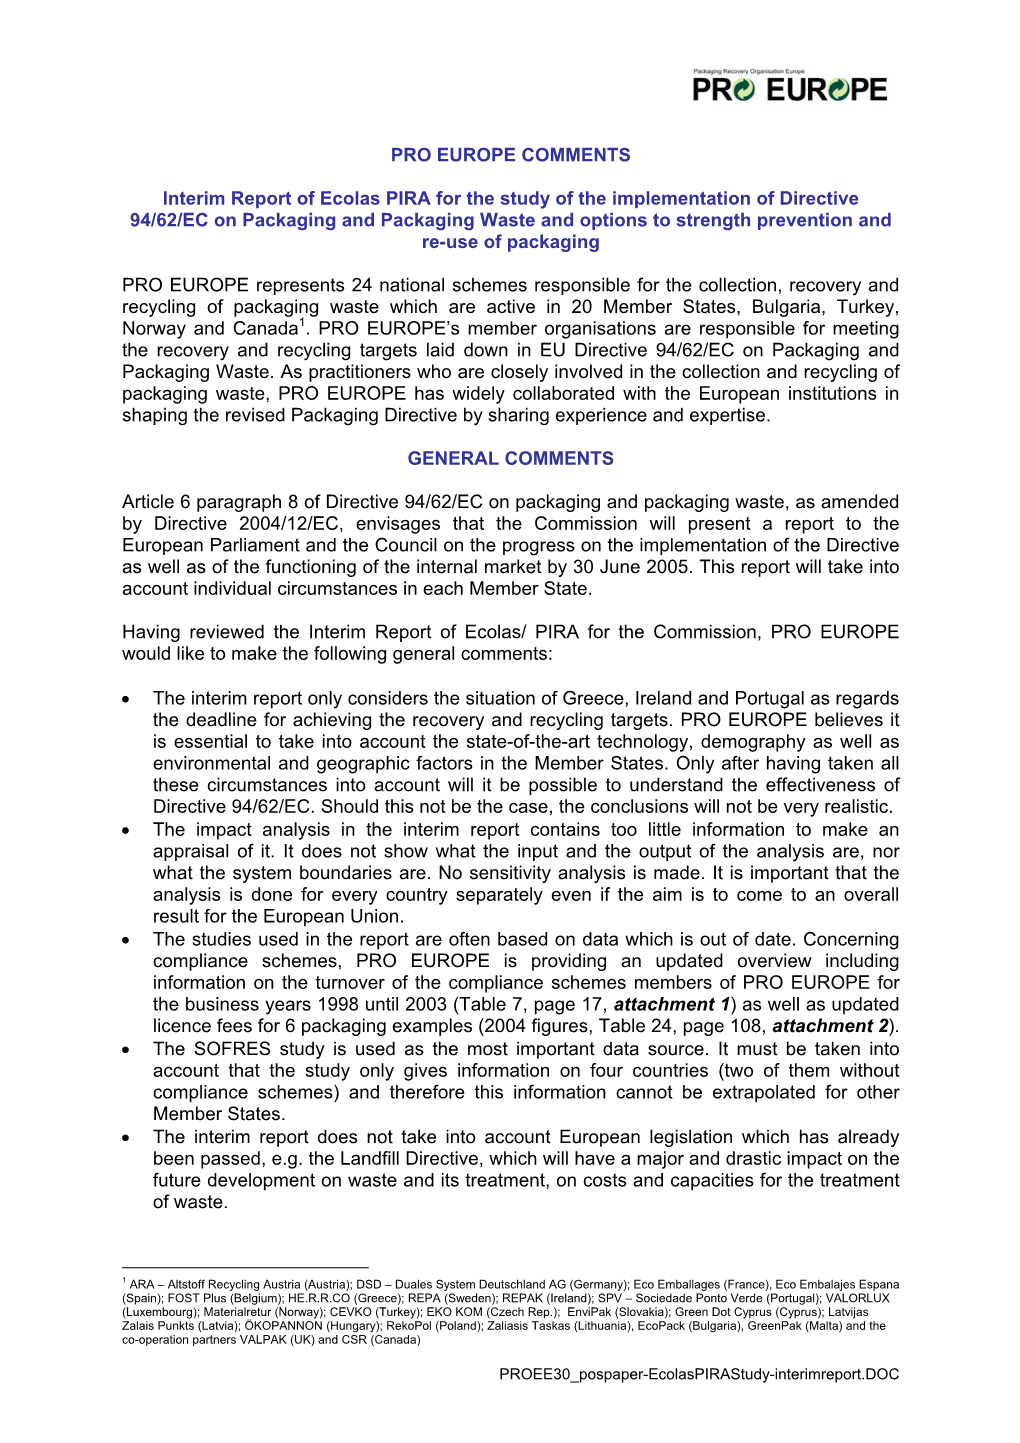 Statement of PRO Europe Regarding the Interim Report of Ecolas / PIRA